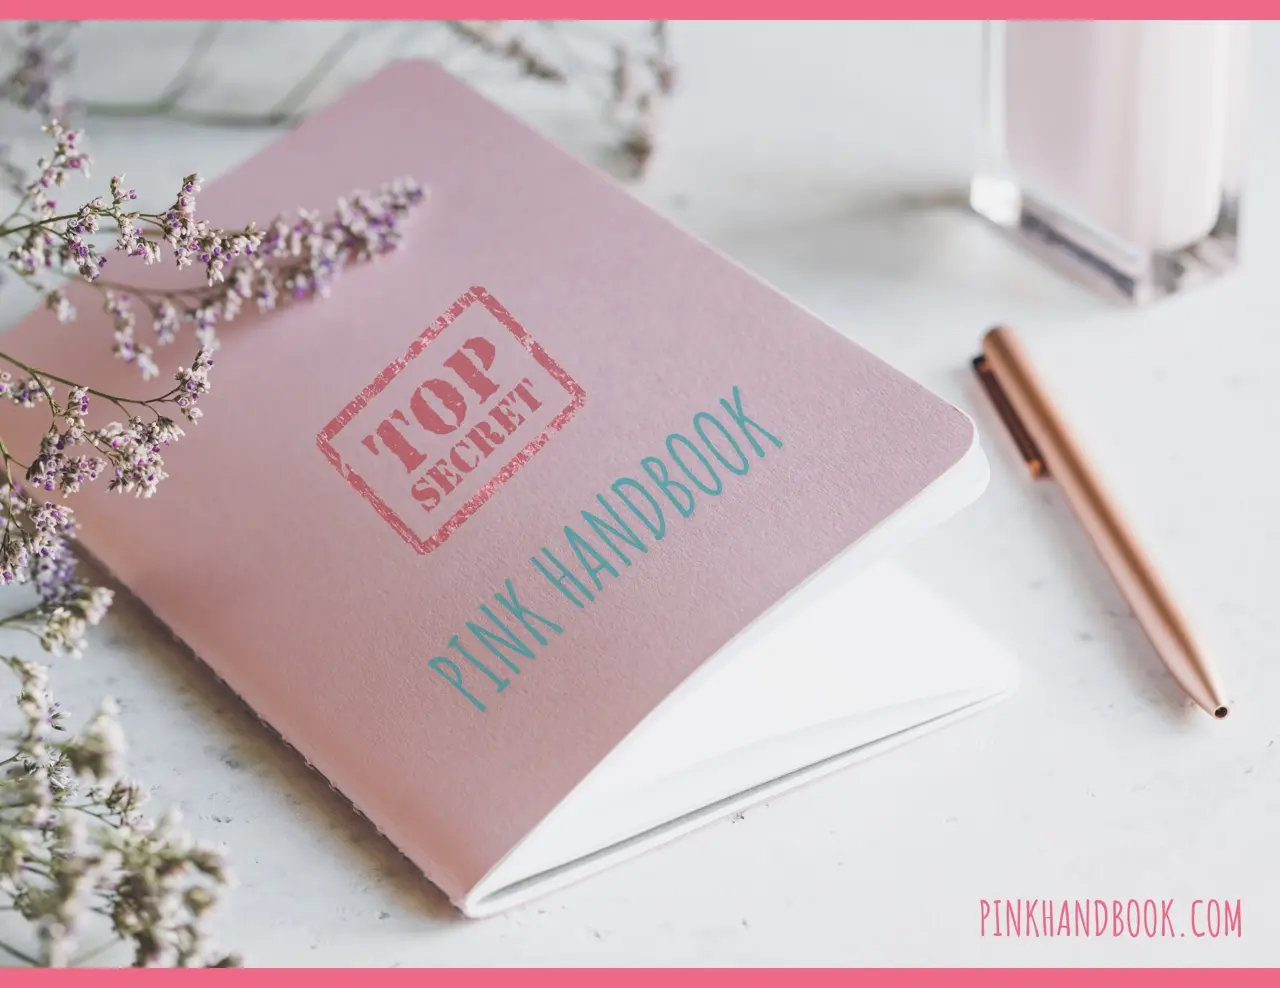 Pink Handbook - cover